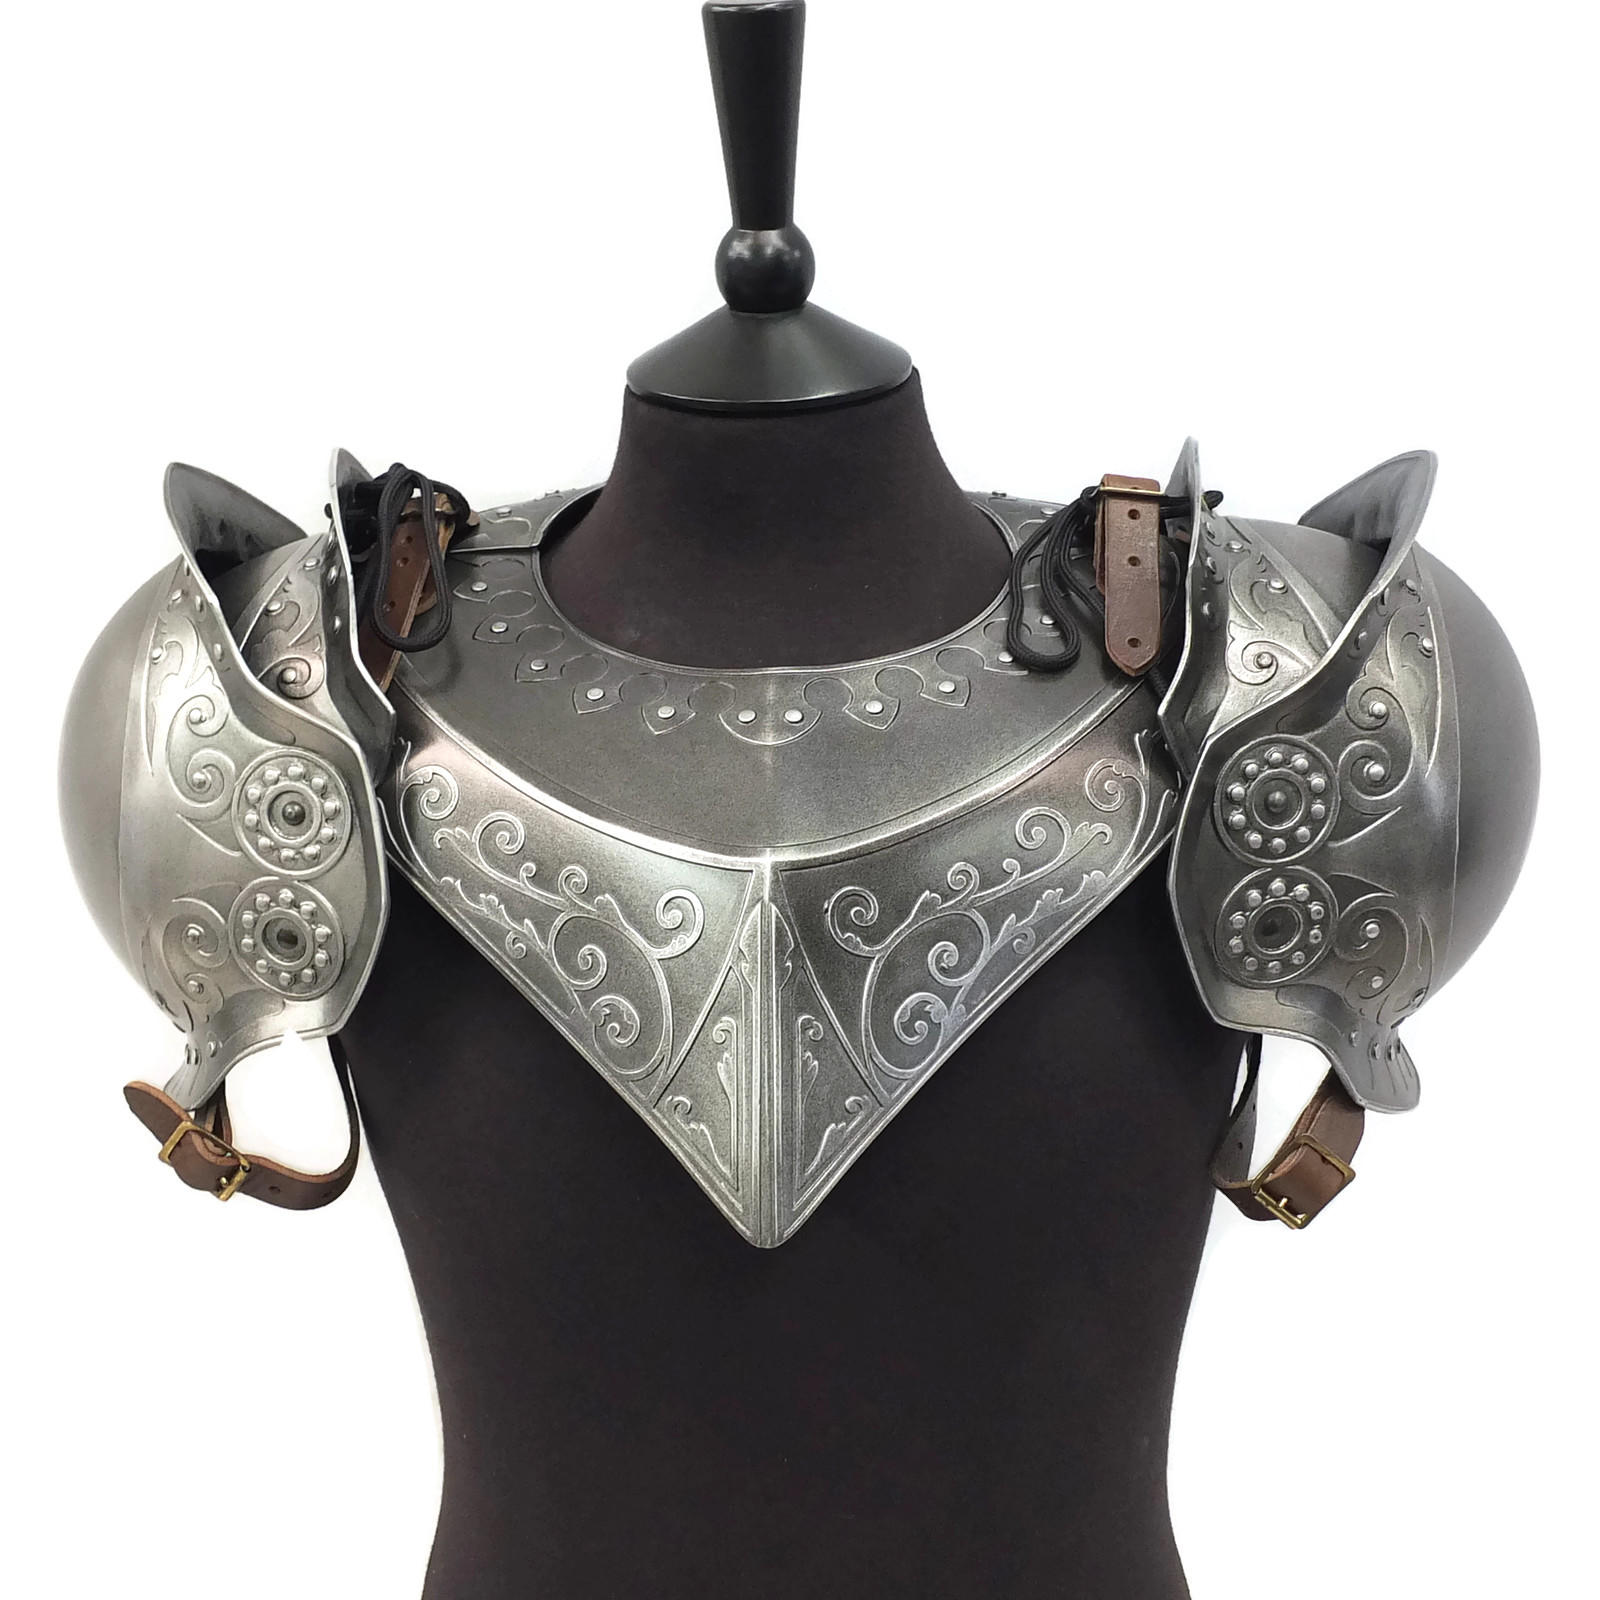 NauticalMart Medieval Larp Fanstasy Steel Gorget Neck Armor